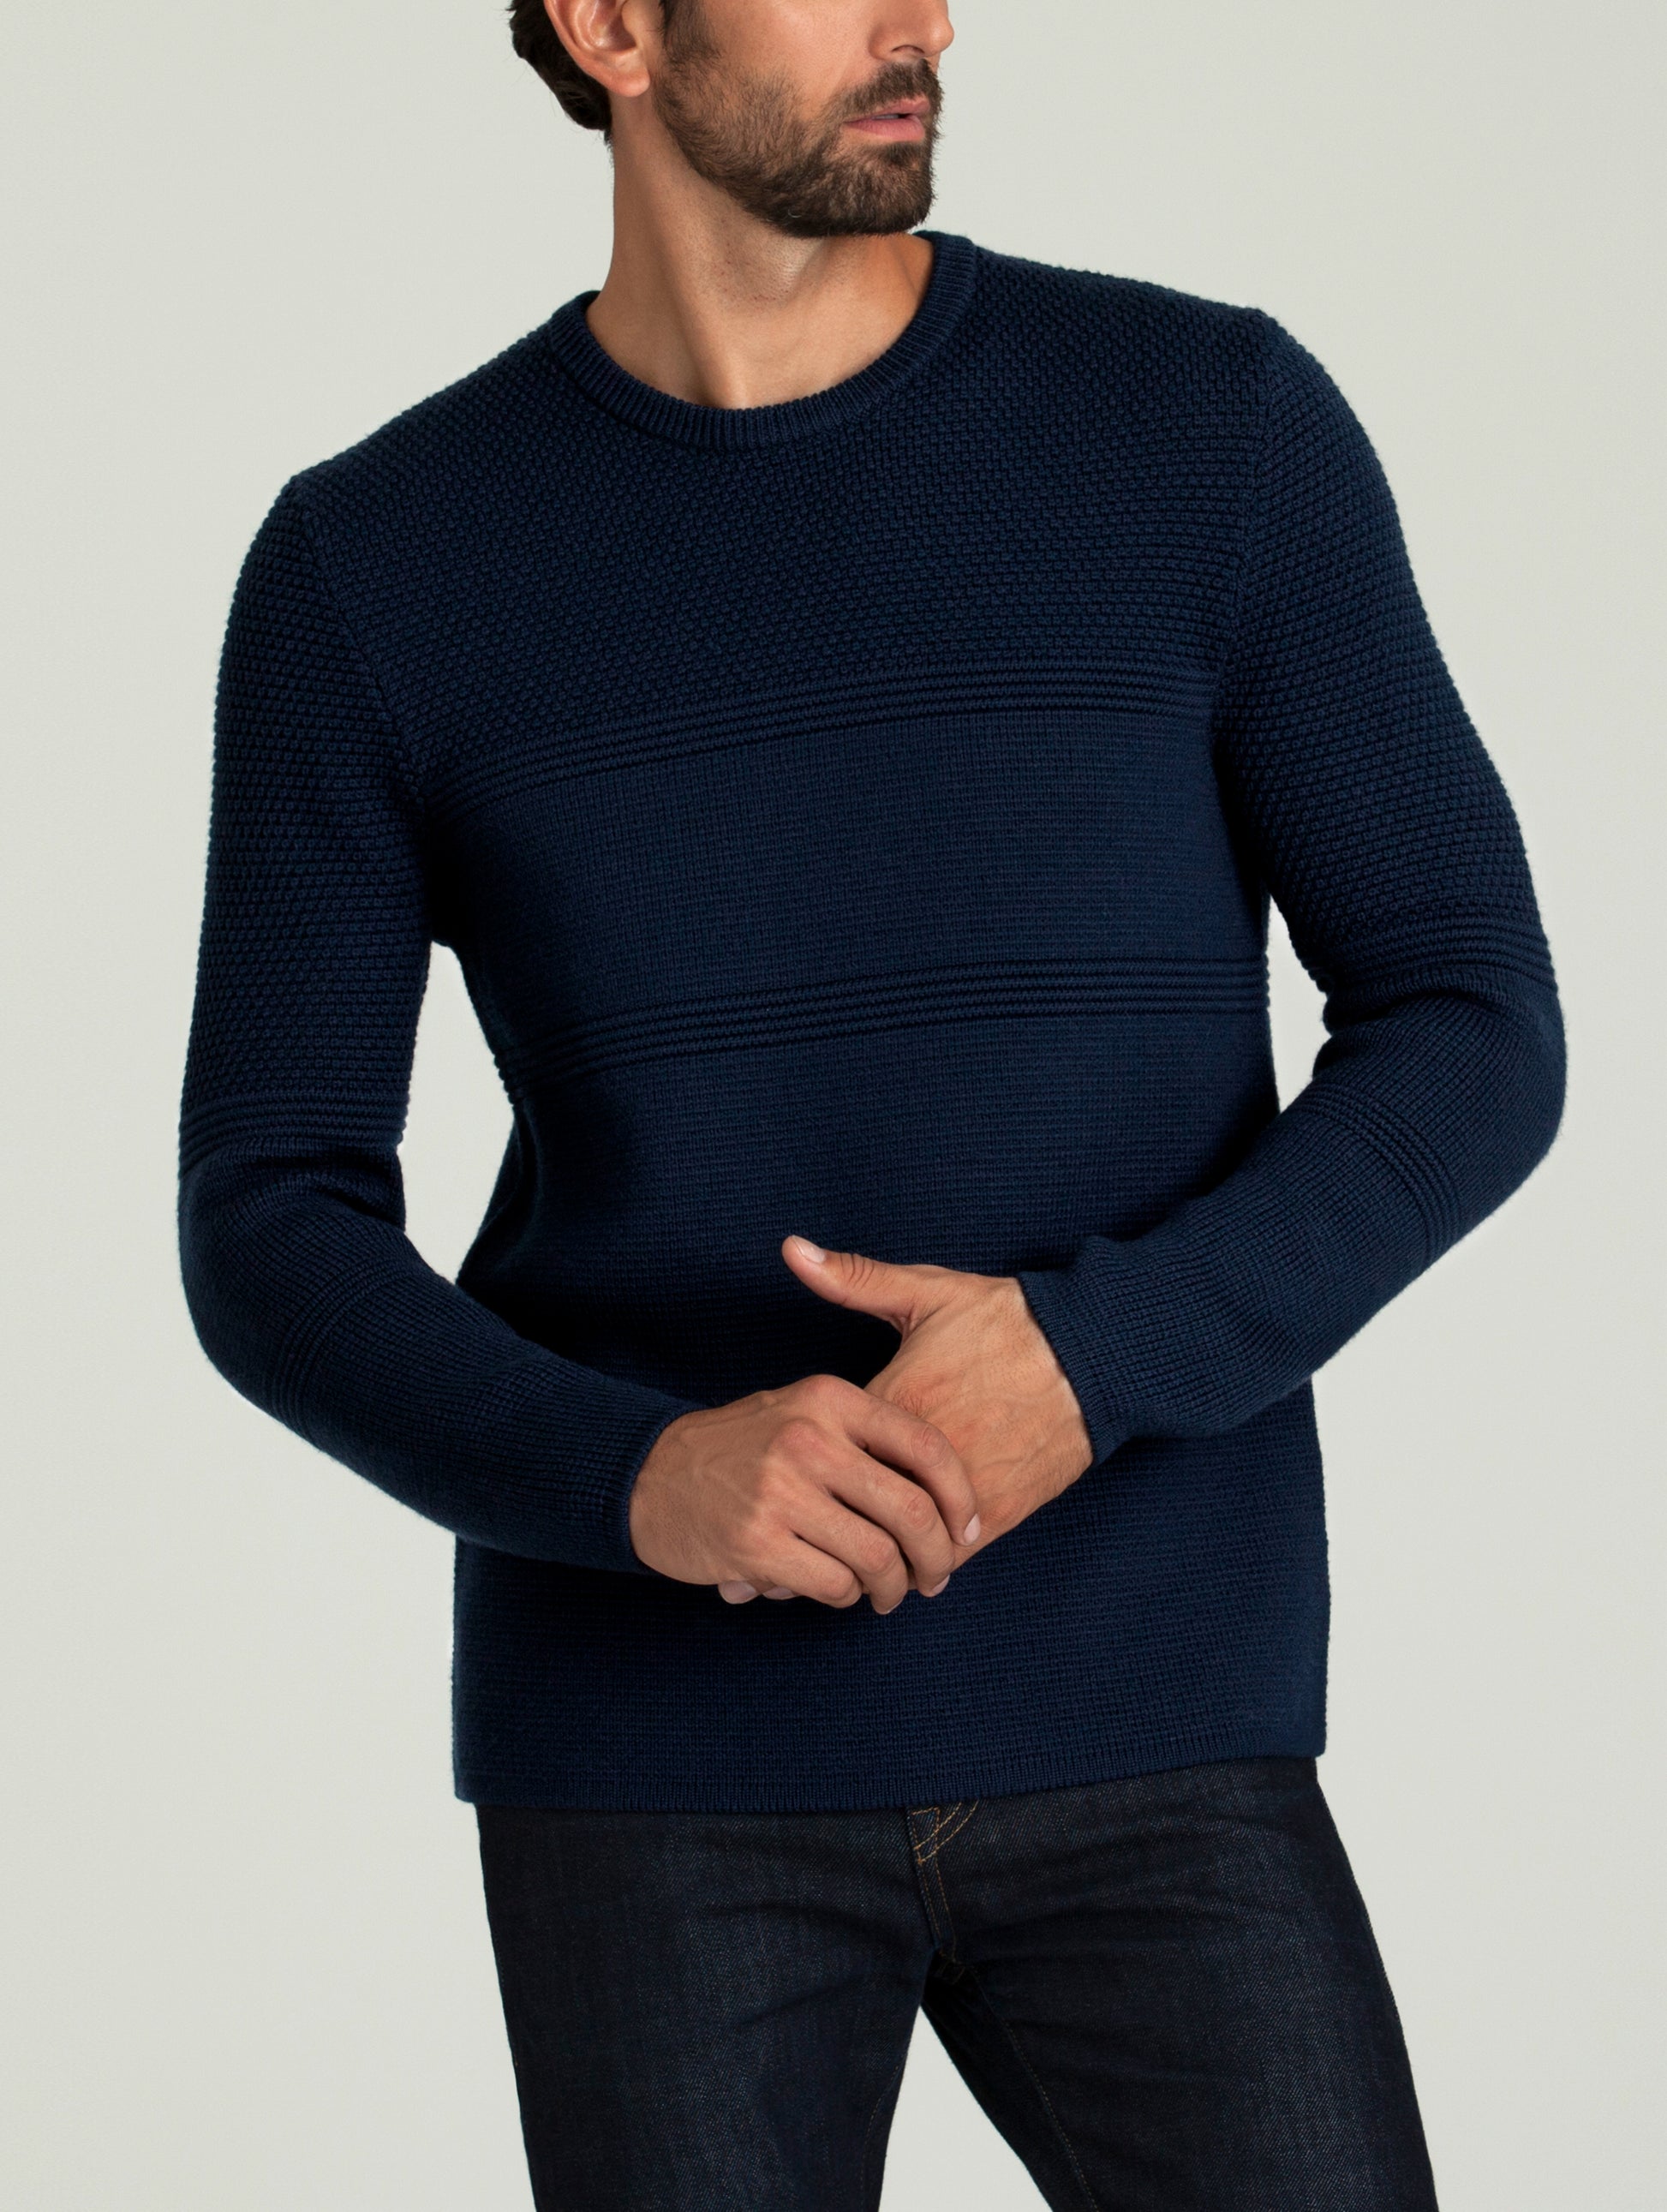 man wearing dark blue sweater